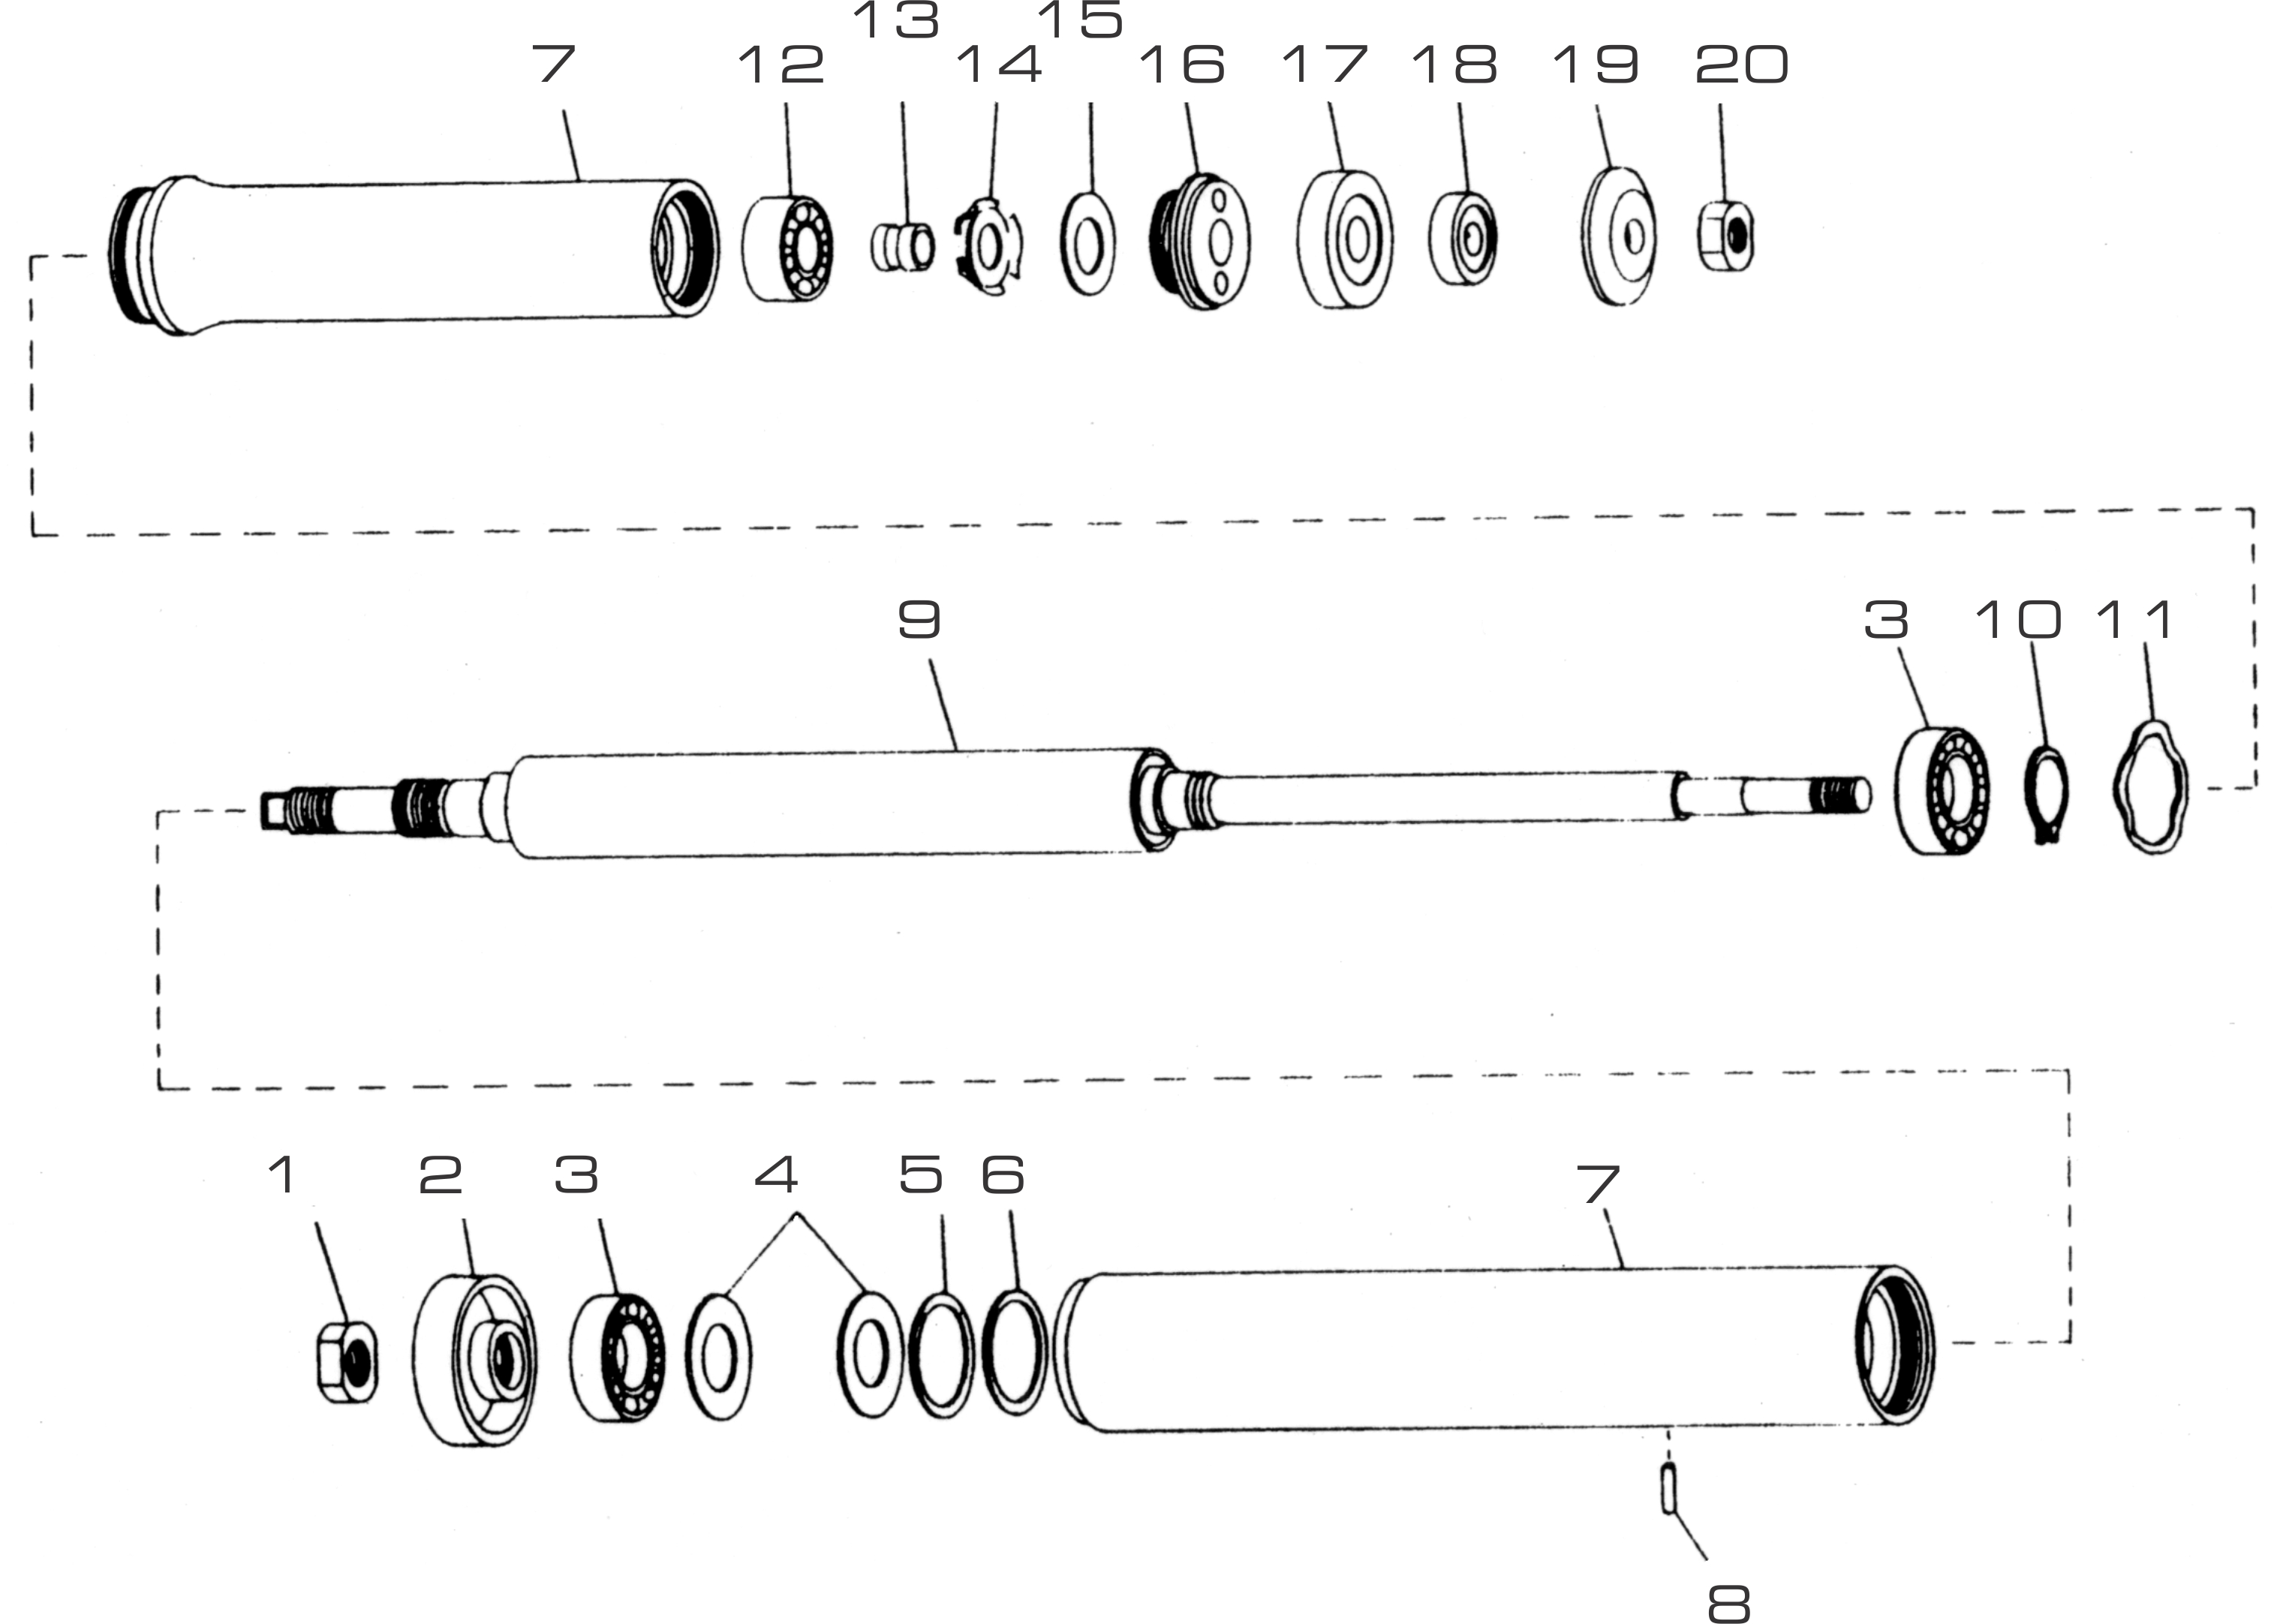 Tool Post Grinder 15" Internal Spindle Replacement Parts | Dumore Series 57 Tool Post Grinders